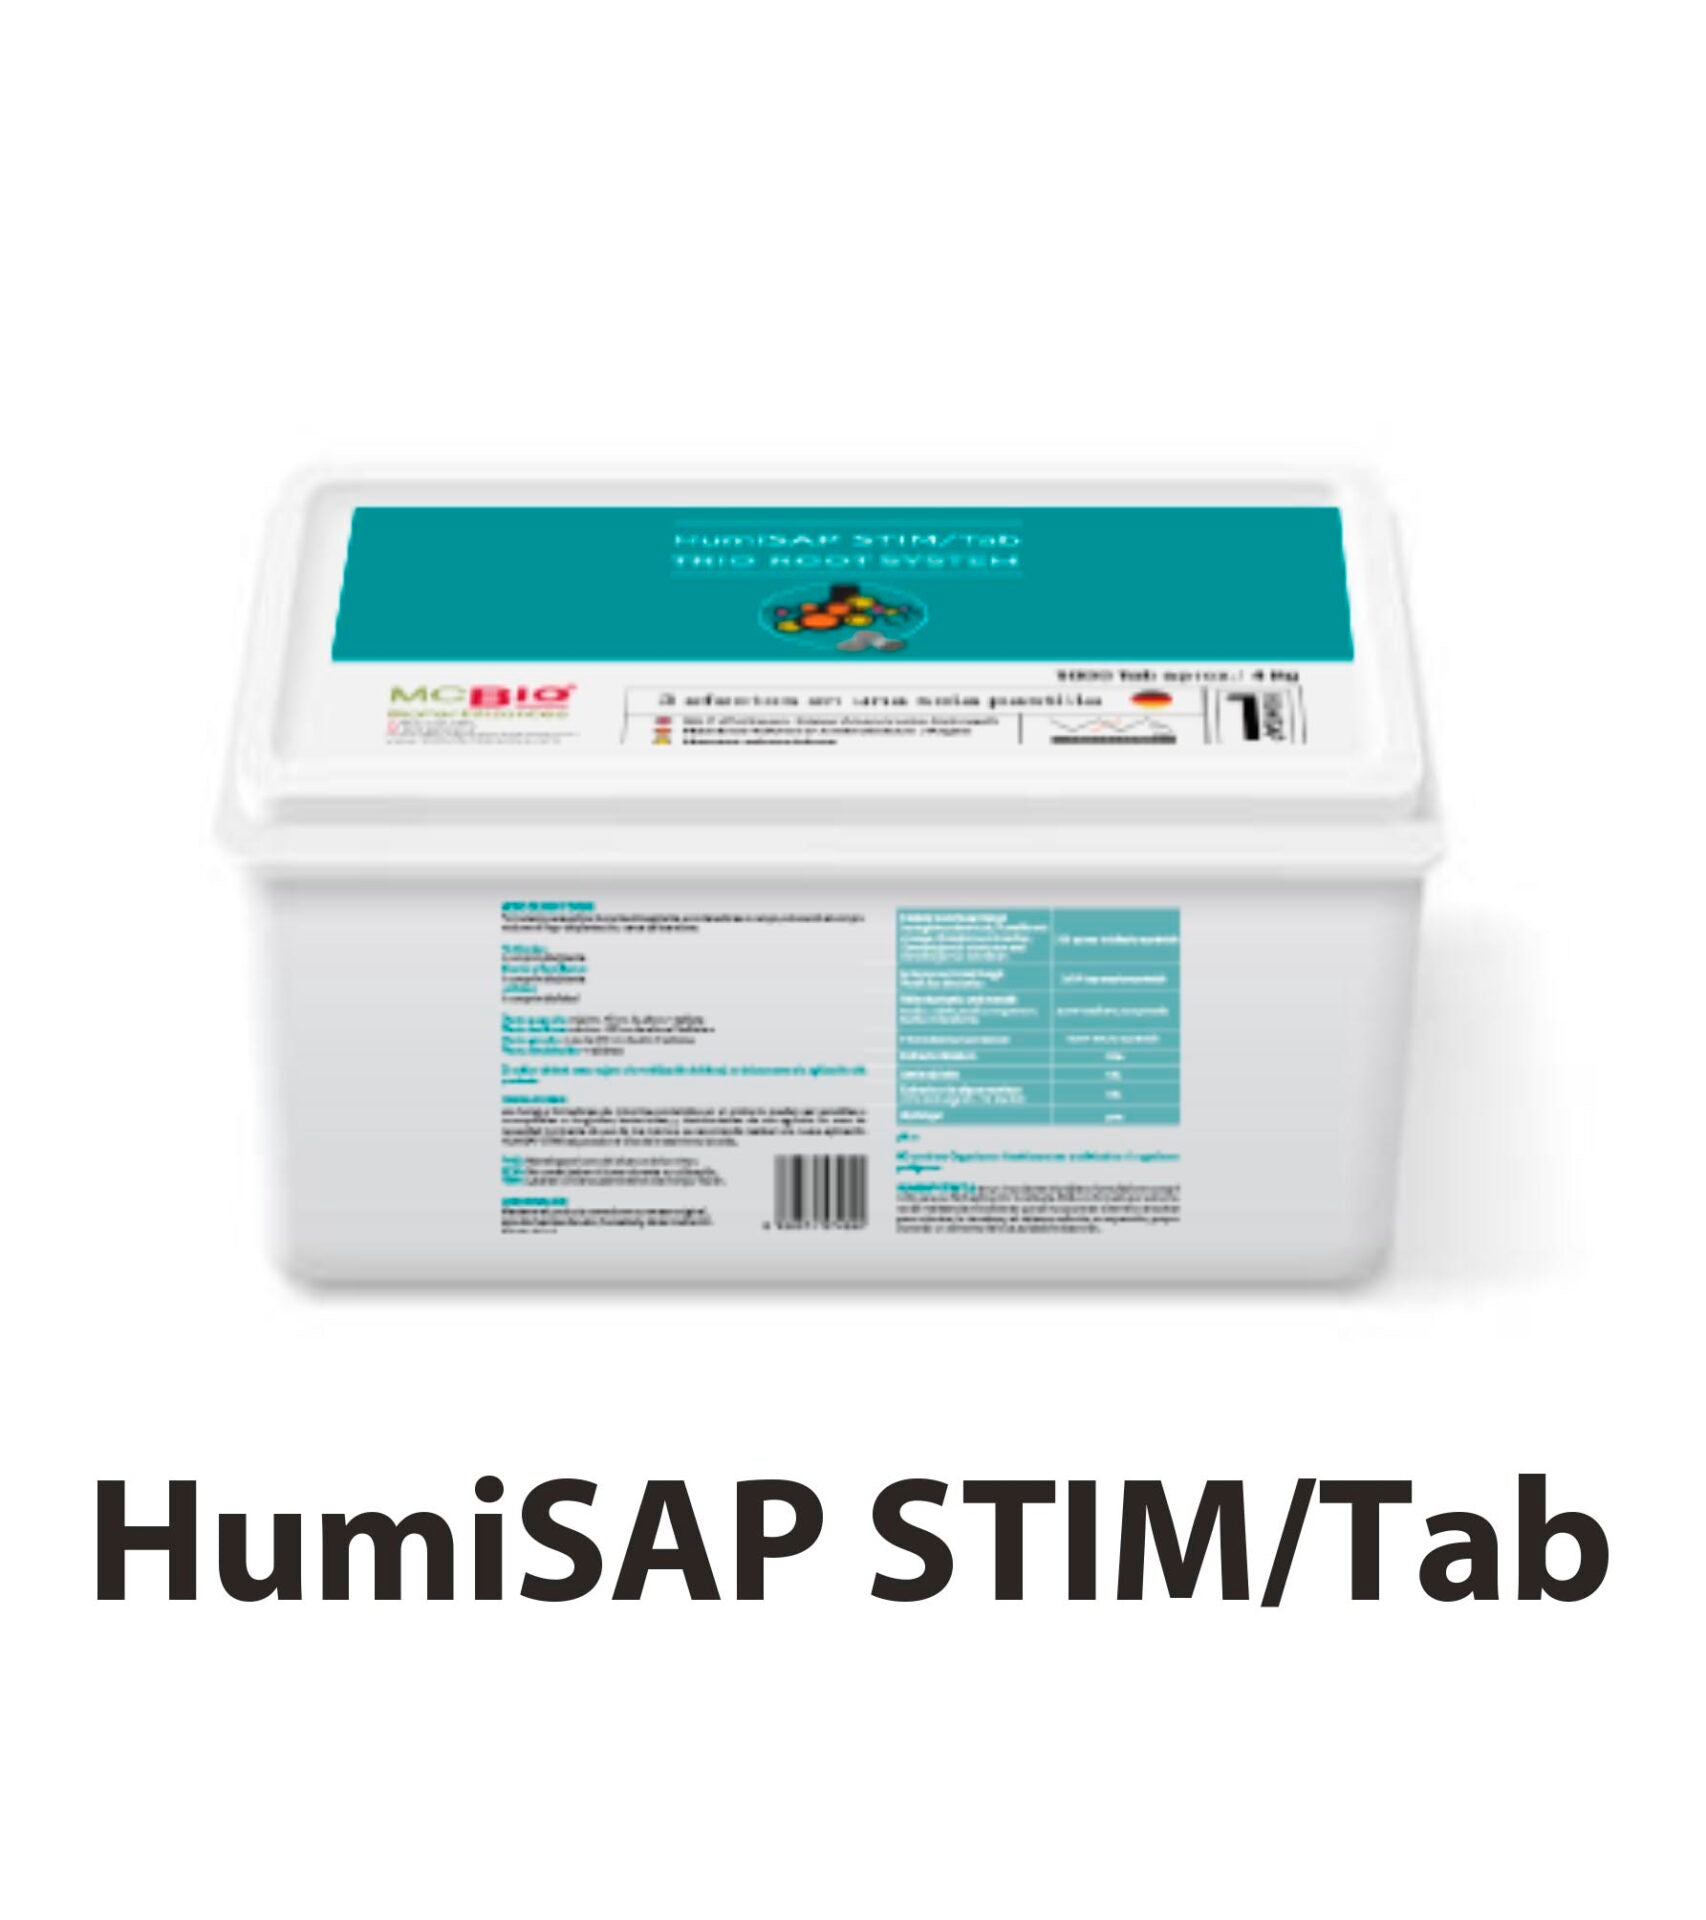 HumiSAP STIM/Tab - Micorrizas y Microorganismos